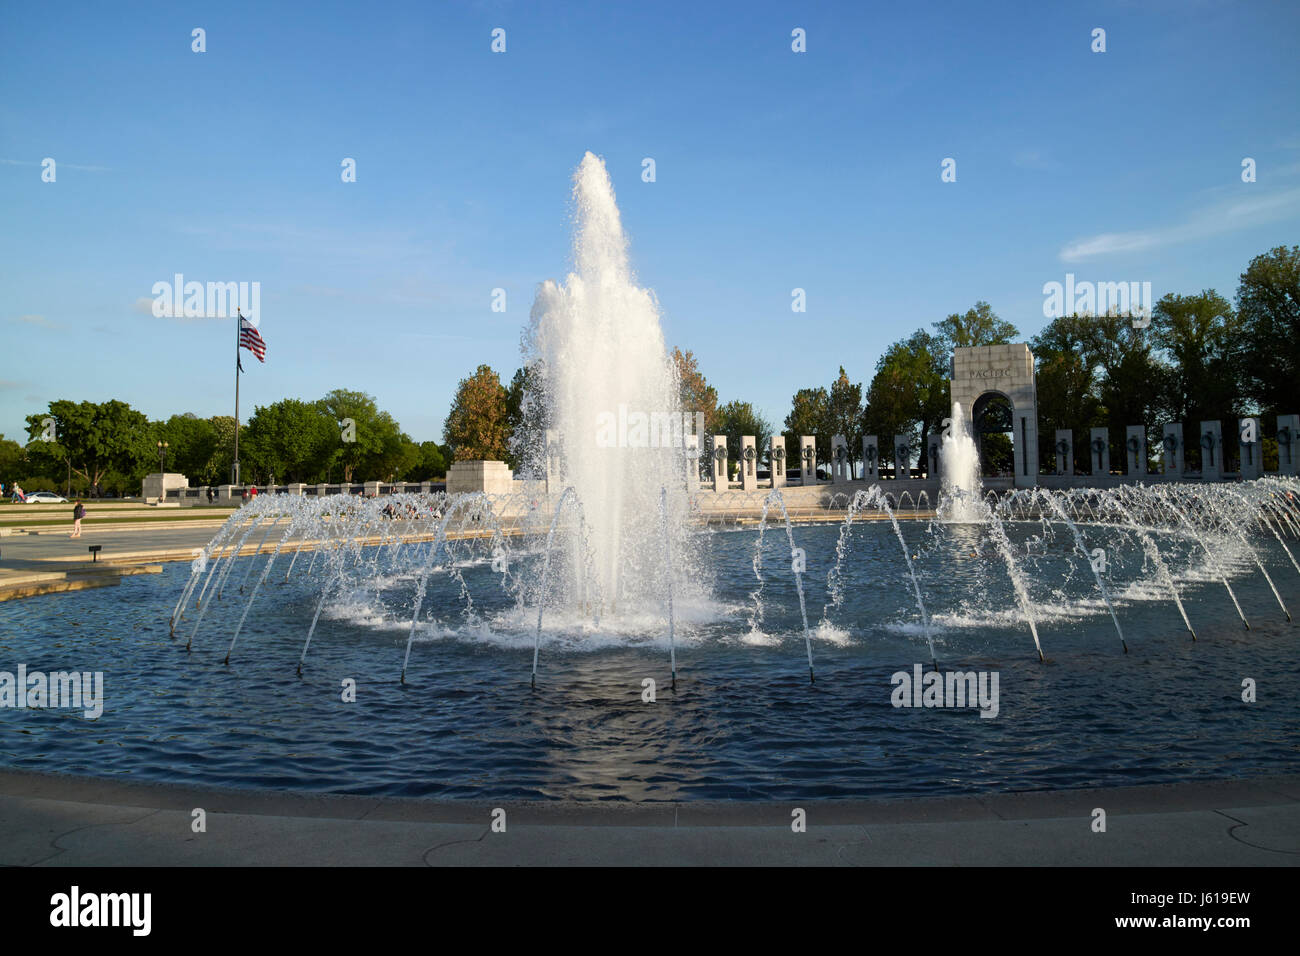 Piscine memorial et fontaines du national world war 2 memorial Washington DC USA Banque D'Images